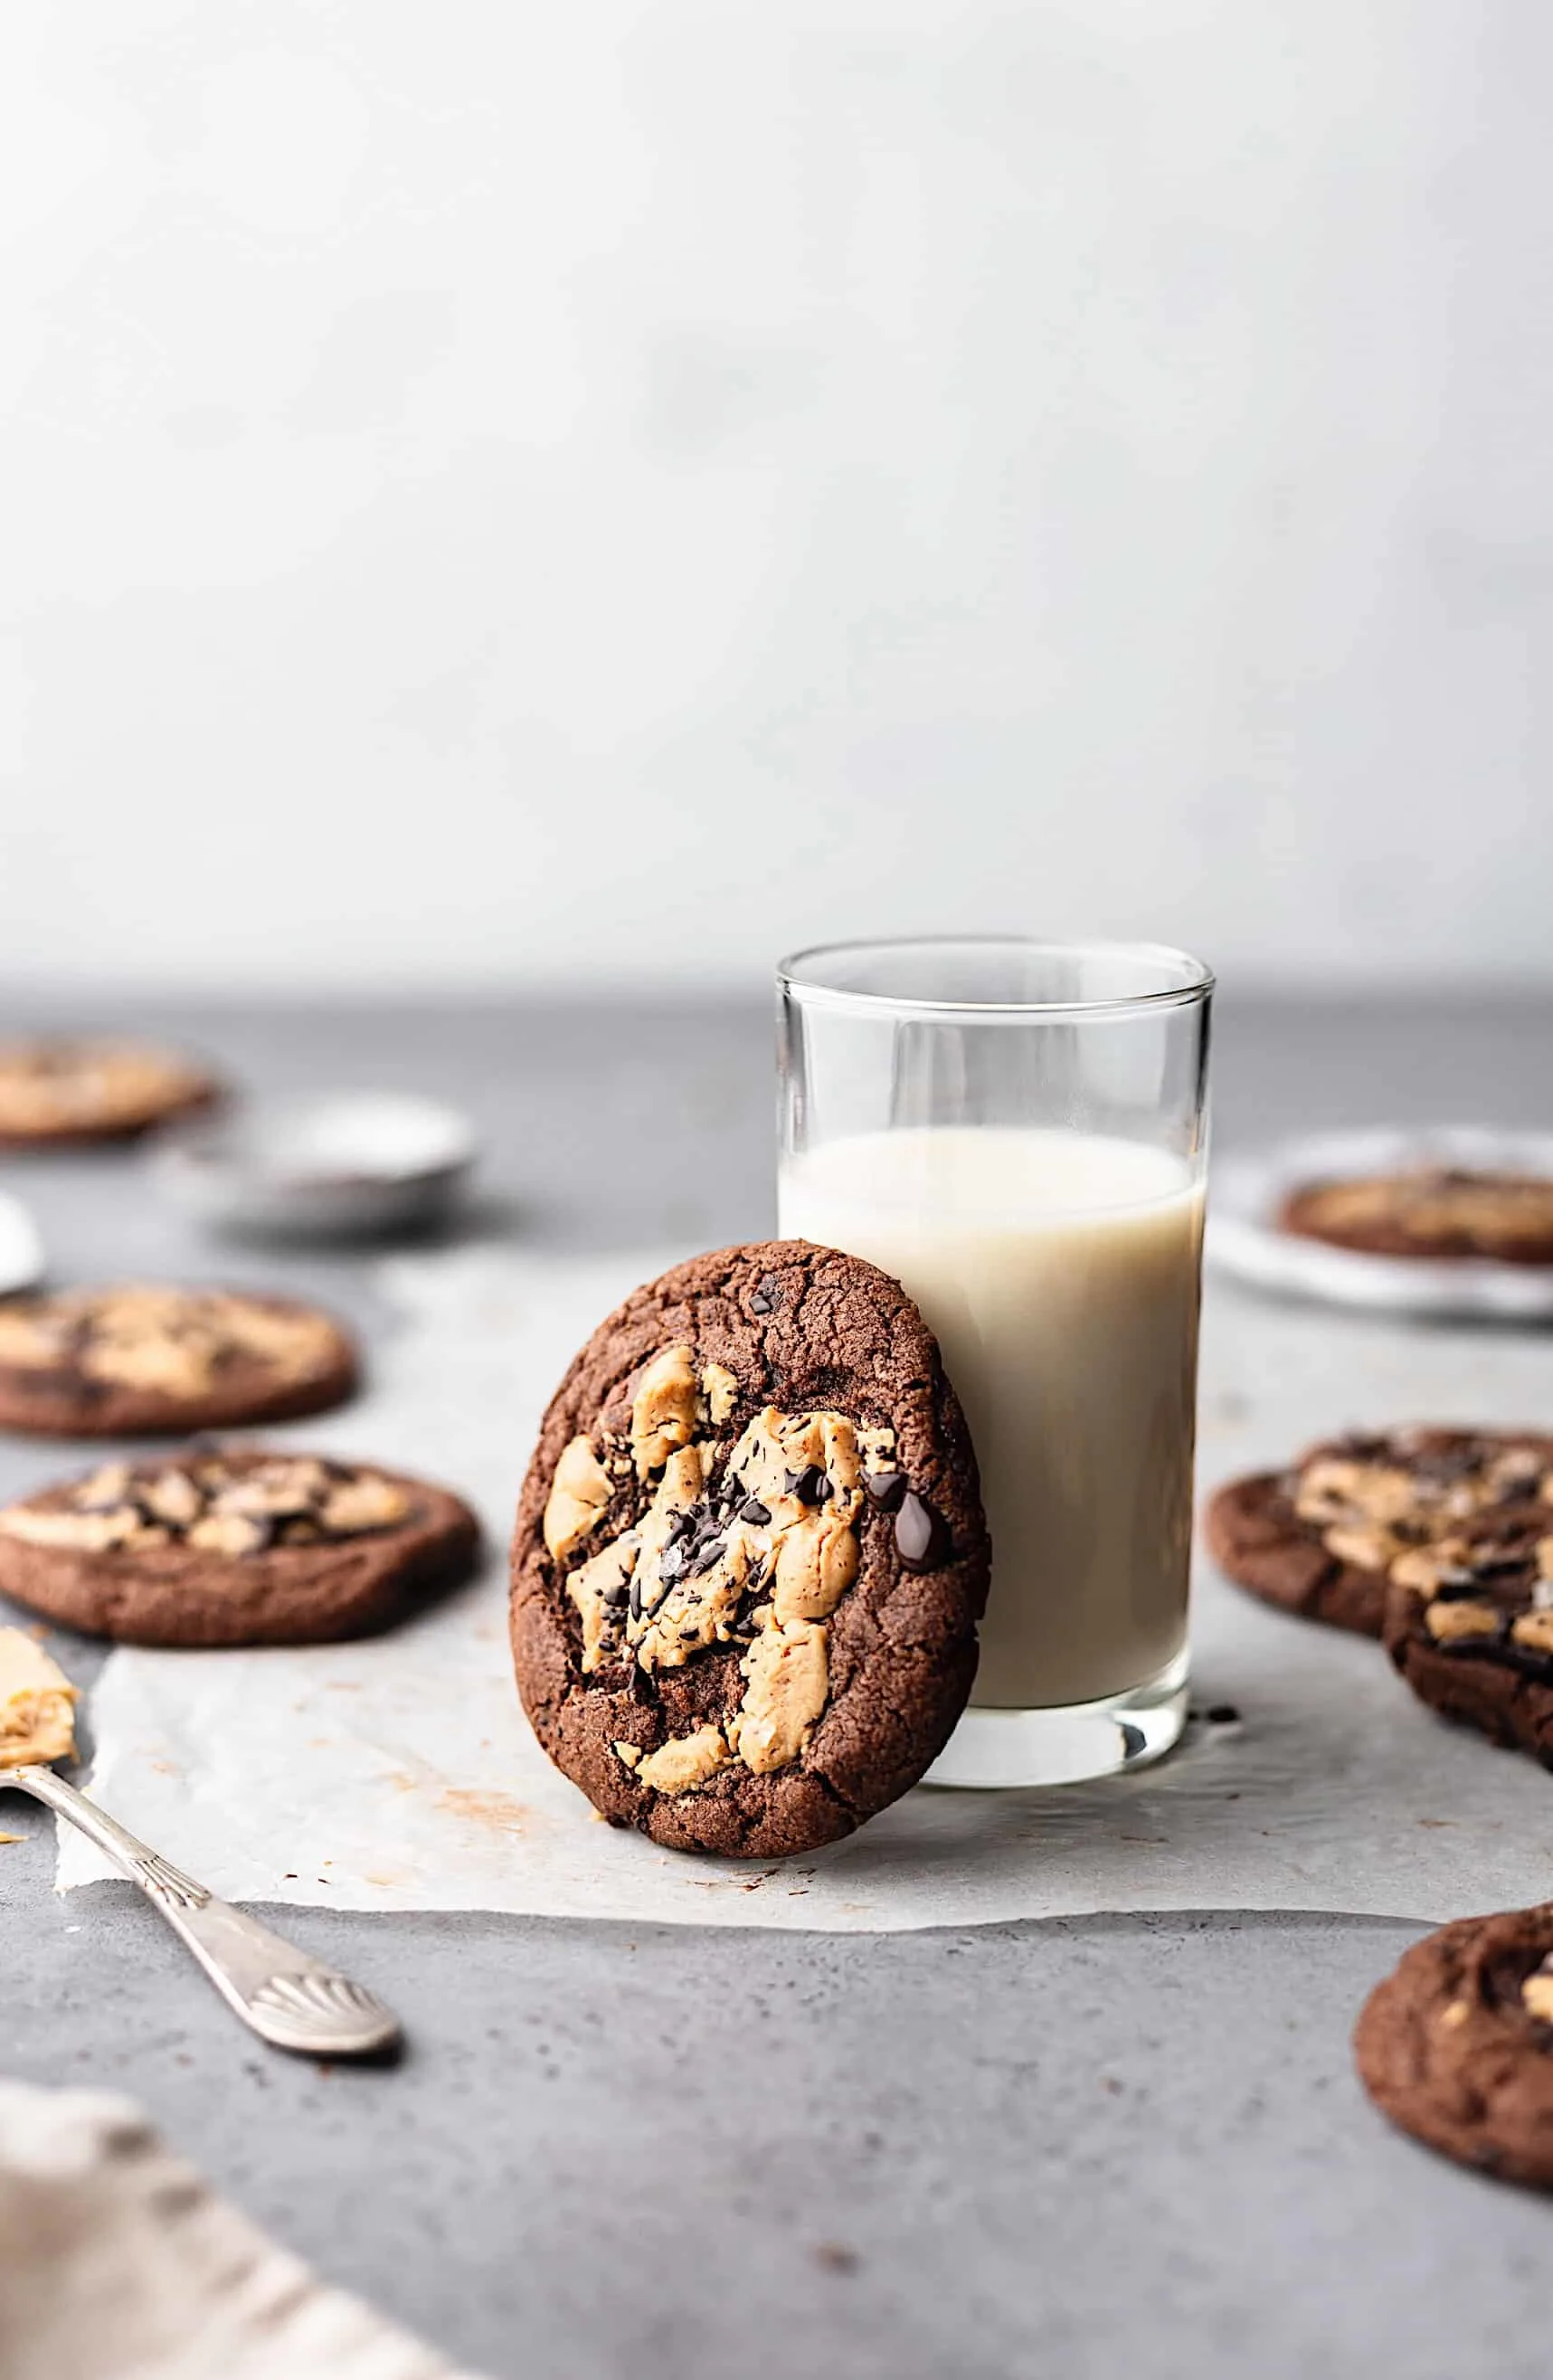 Vegan Chocolate Peanut Butter Cookies #cookies #recipe #vegan #chocolate #peanutbutter